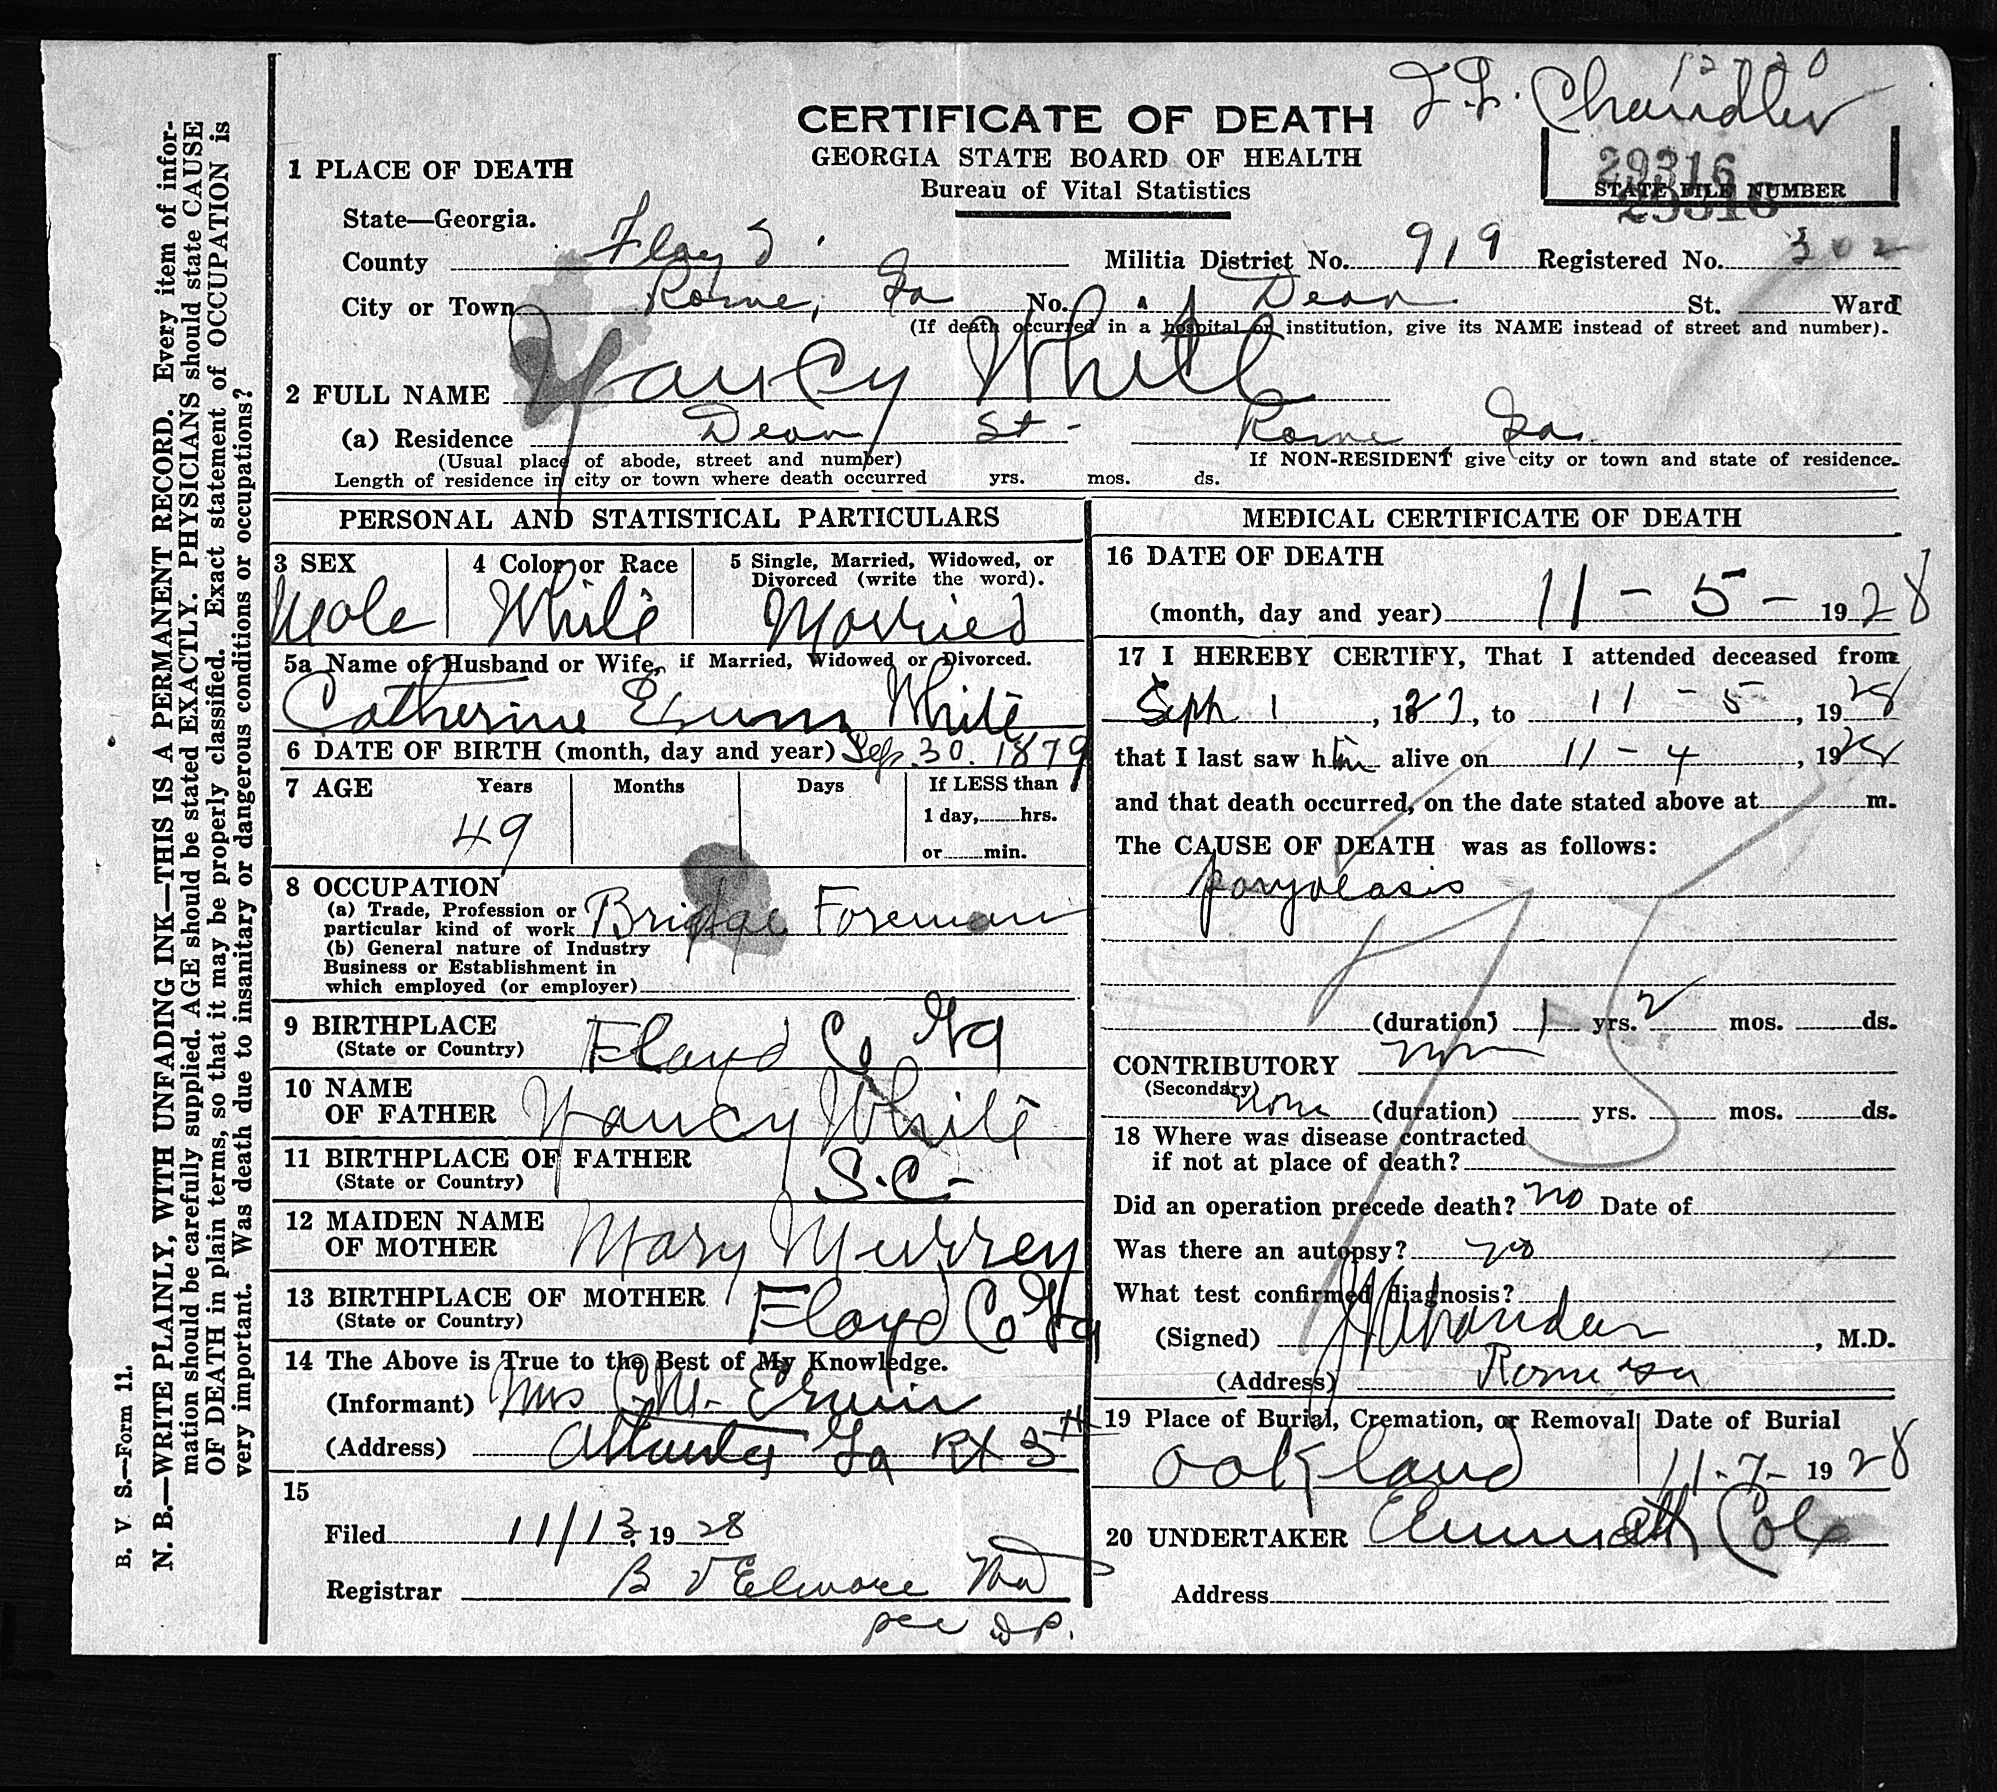 Yancey White Jr. death certificate 1928